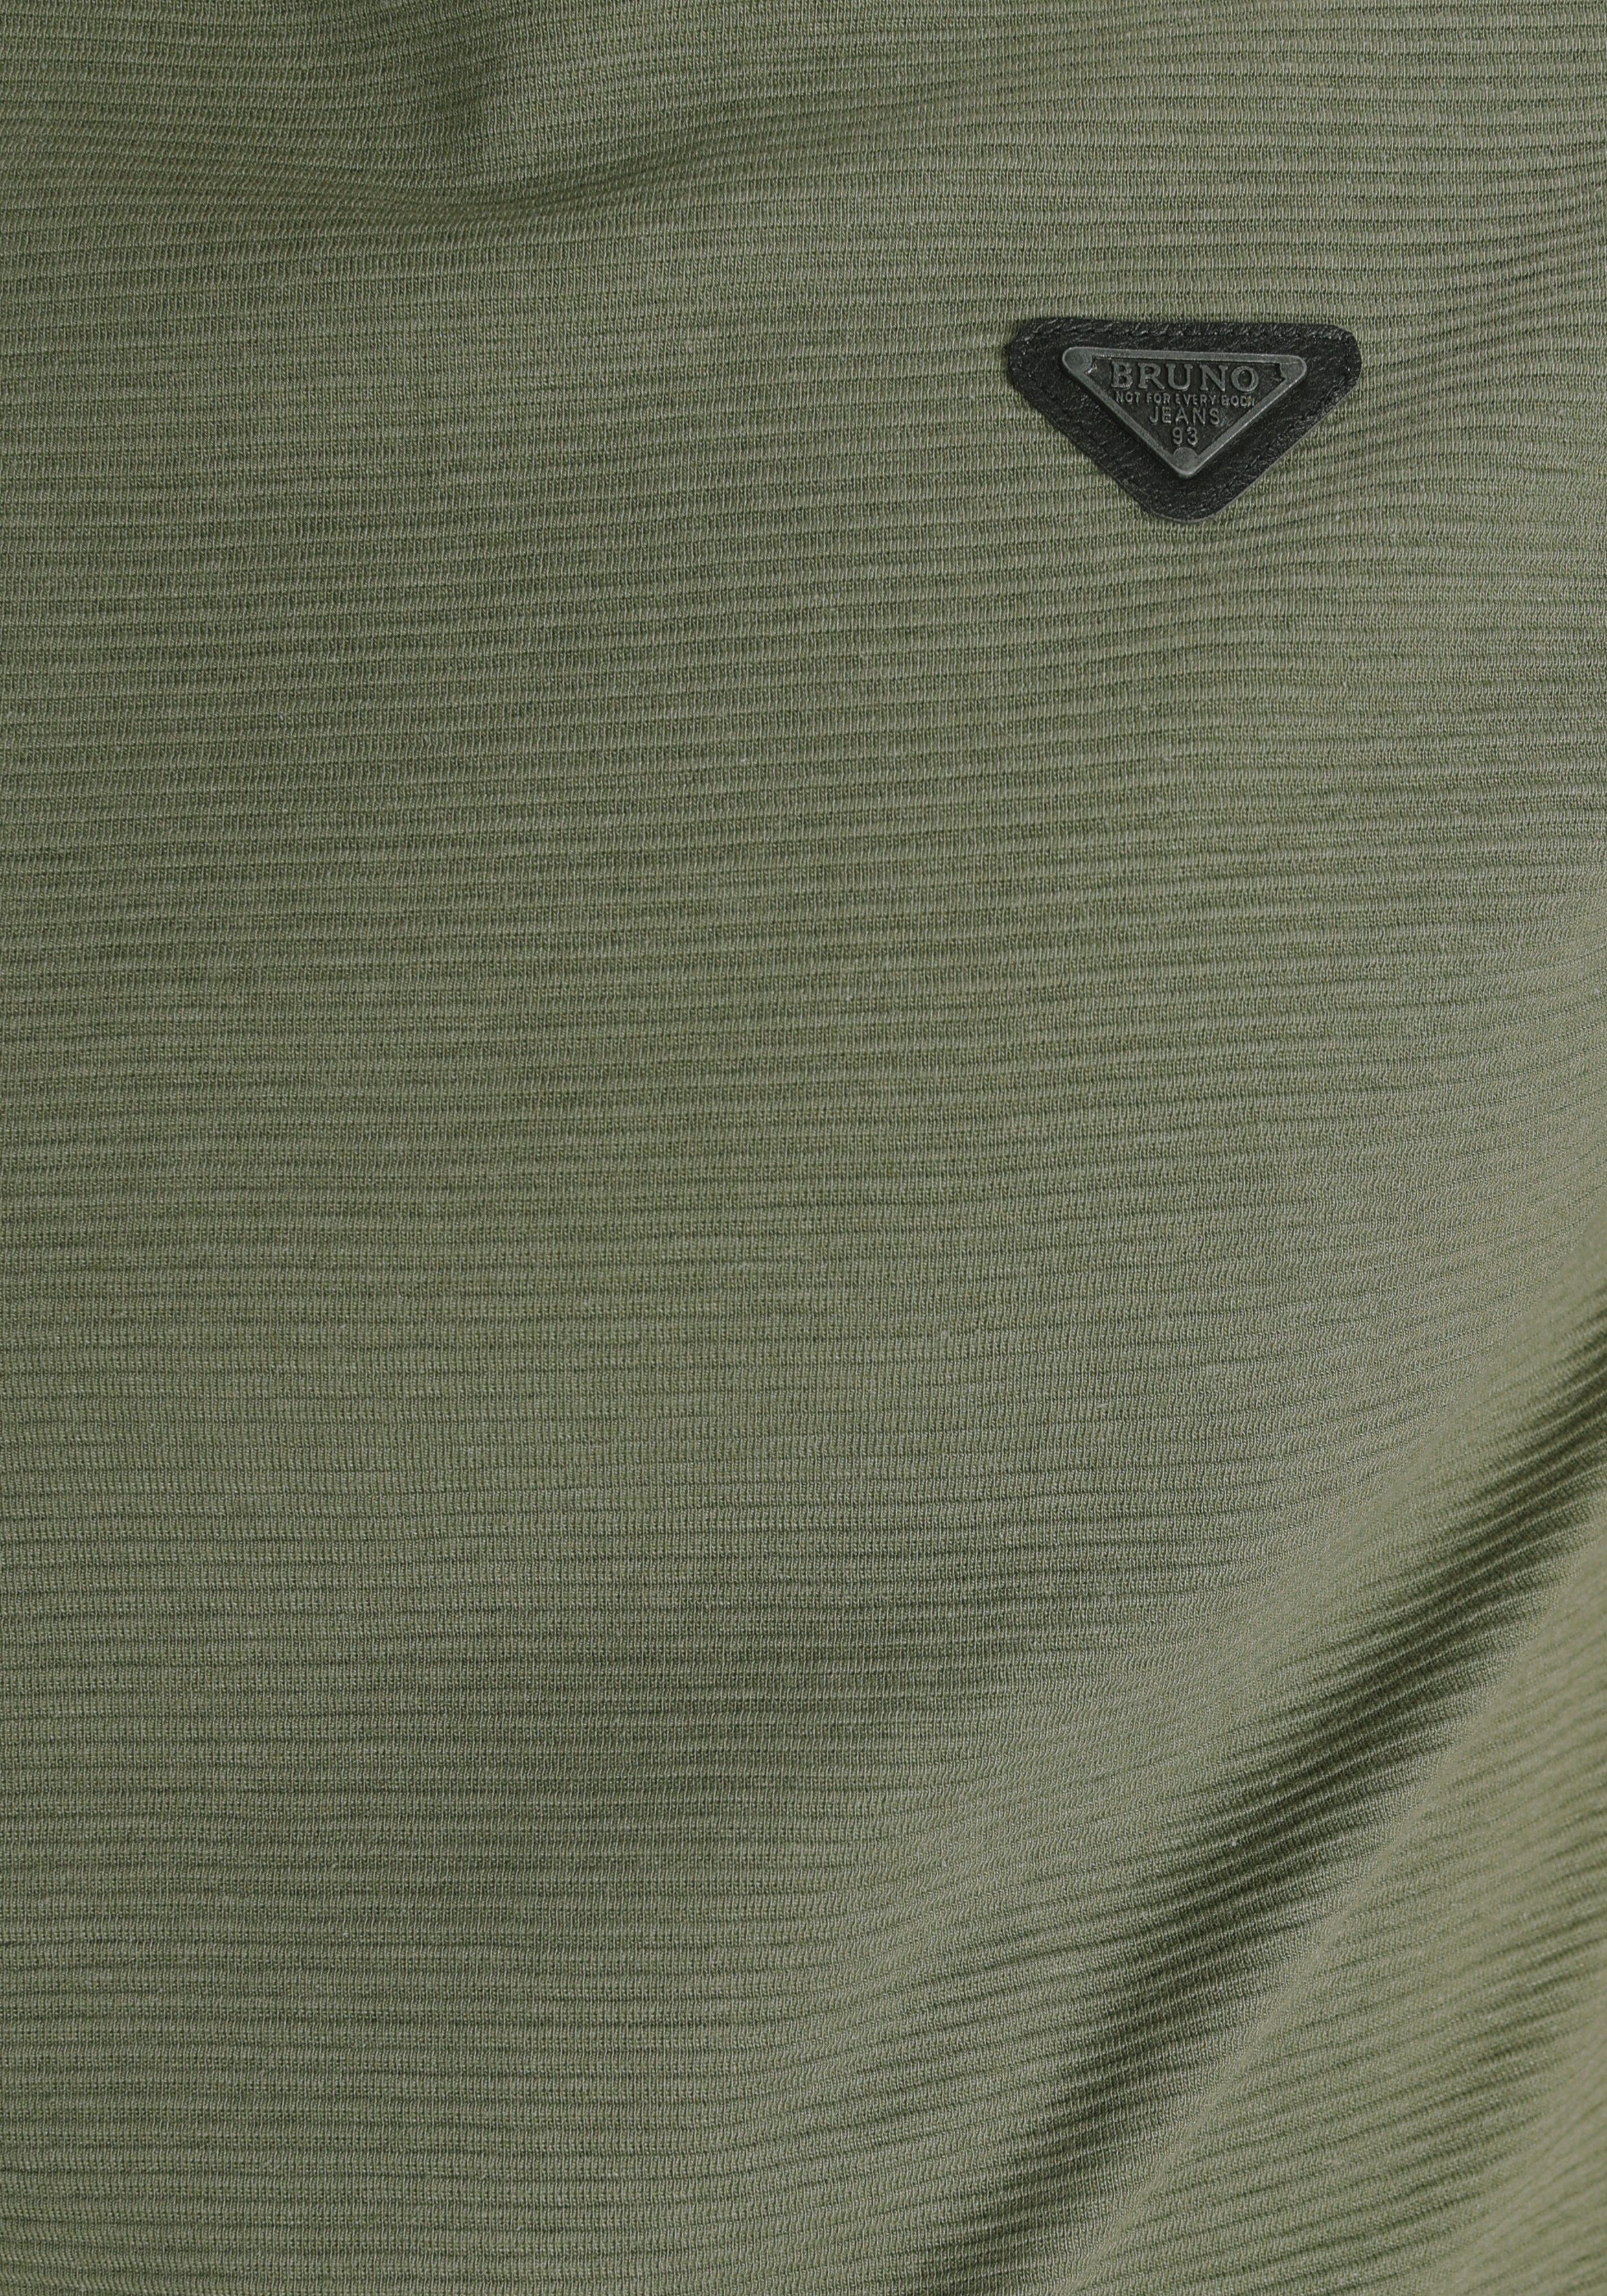 Metall-Badge Banani gerippt T-Shirt leicht oliv mit Bruno